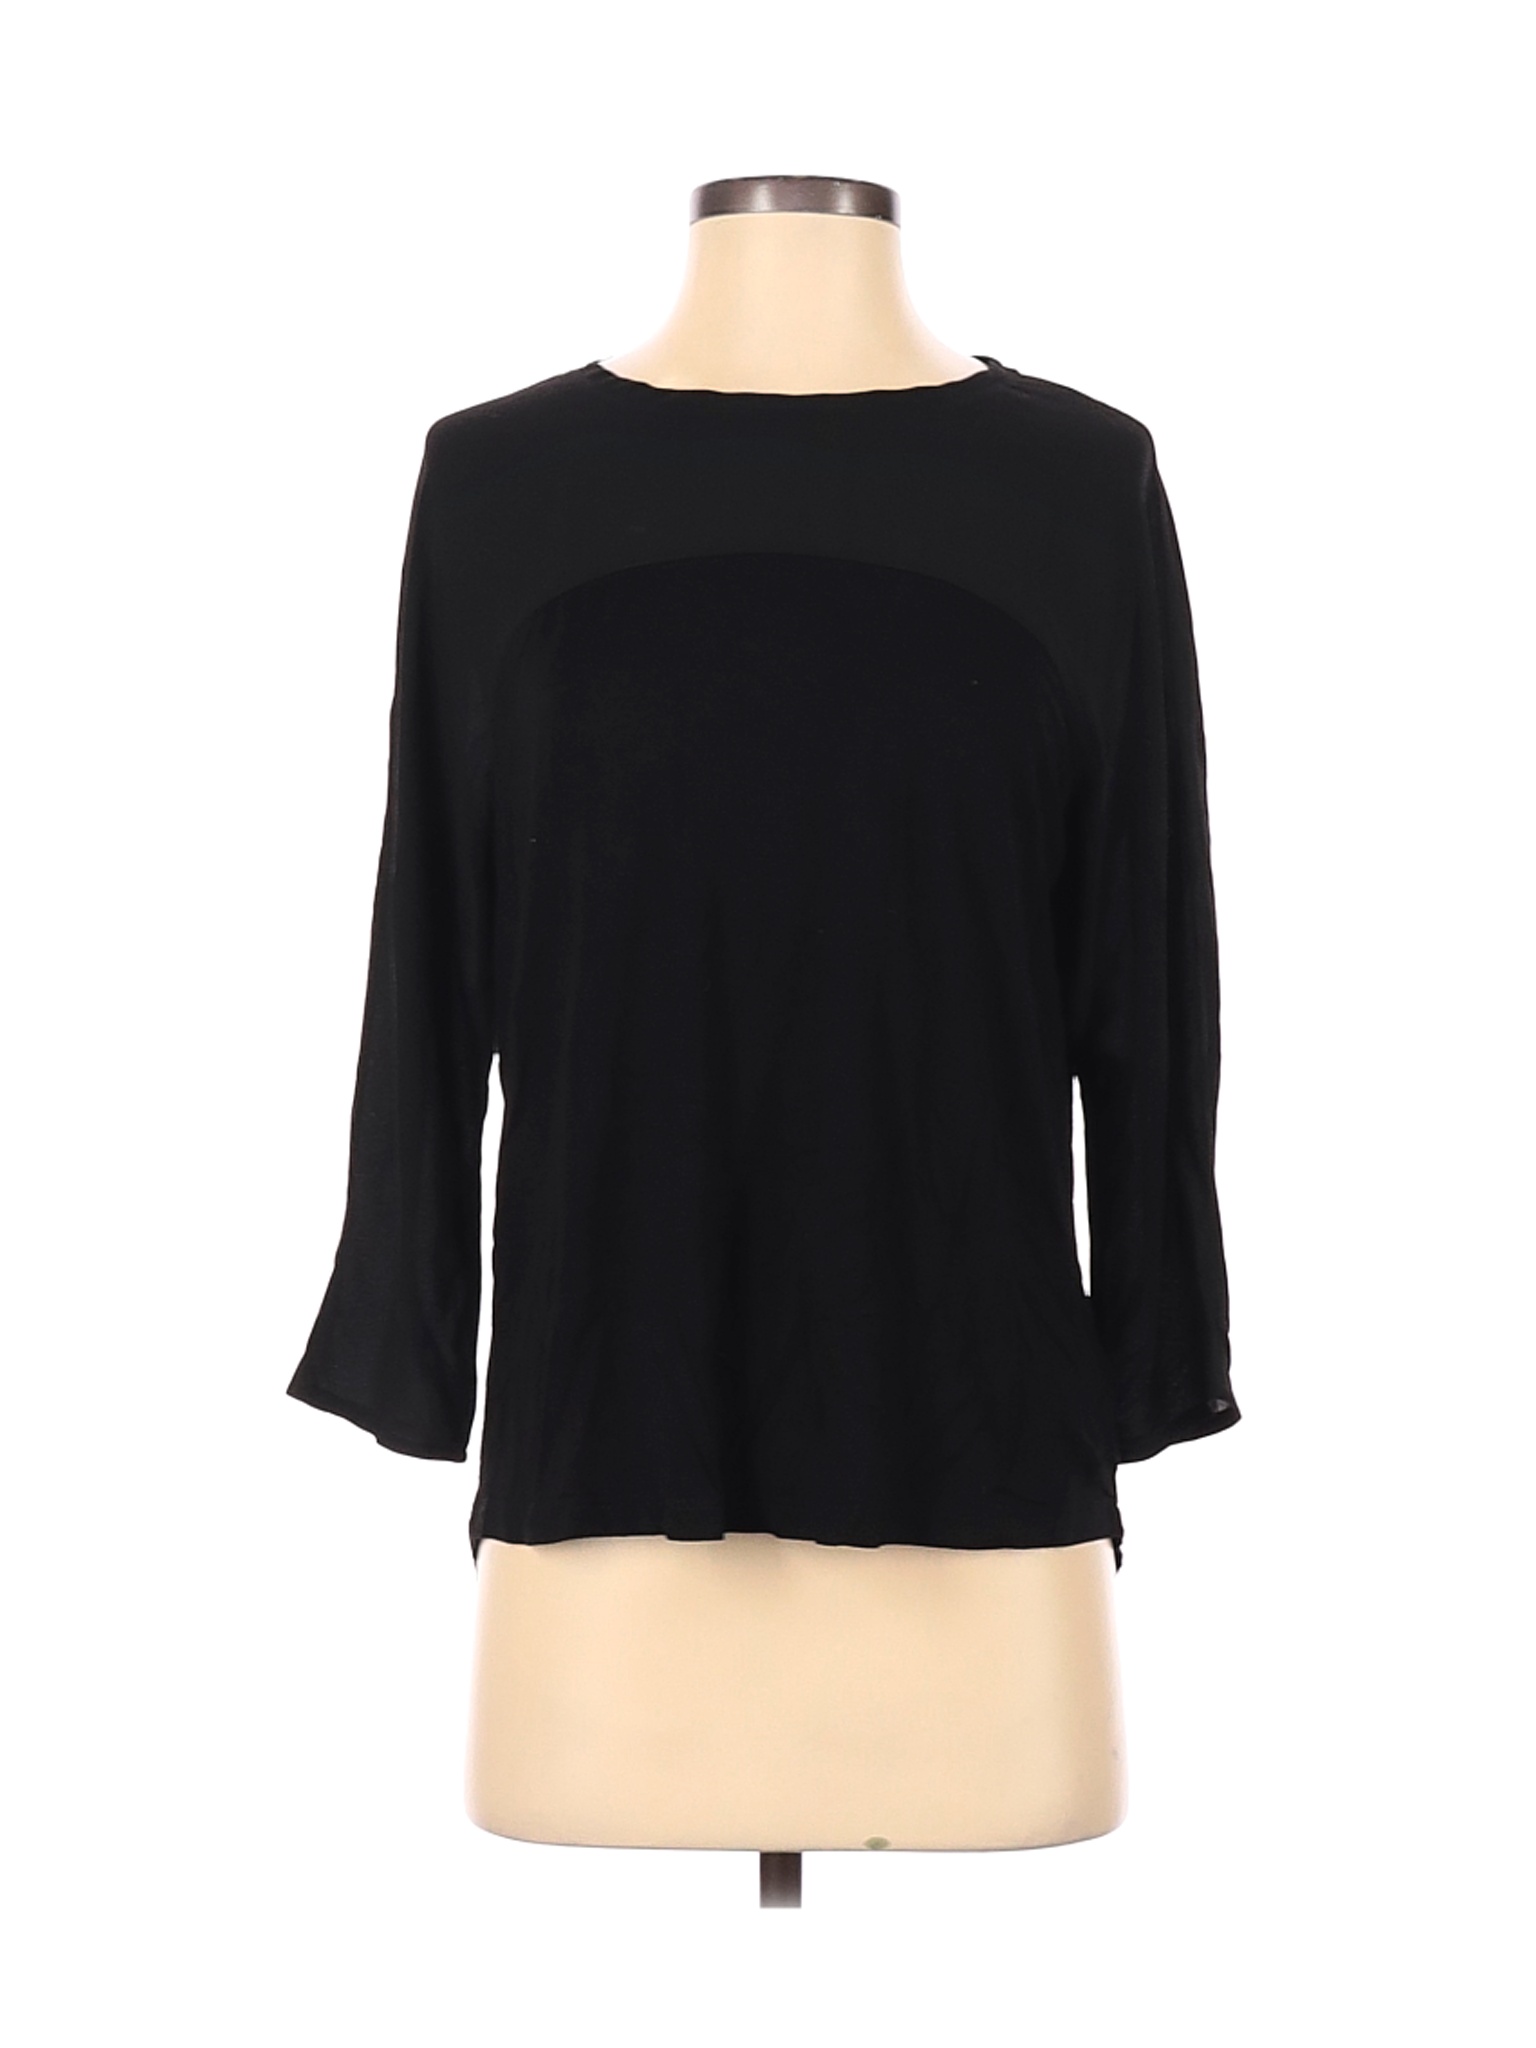 Tahari Women Black 3/4 Sleeve Top S | eBay